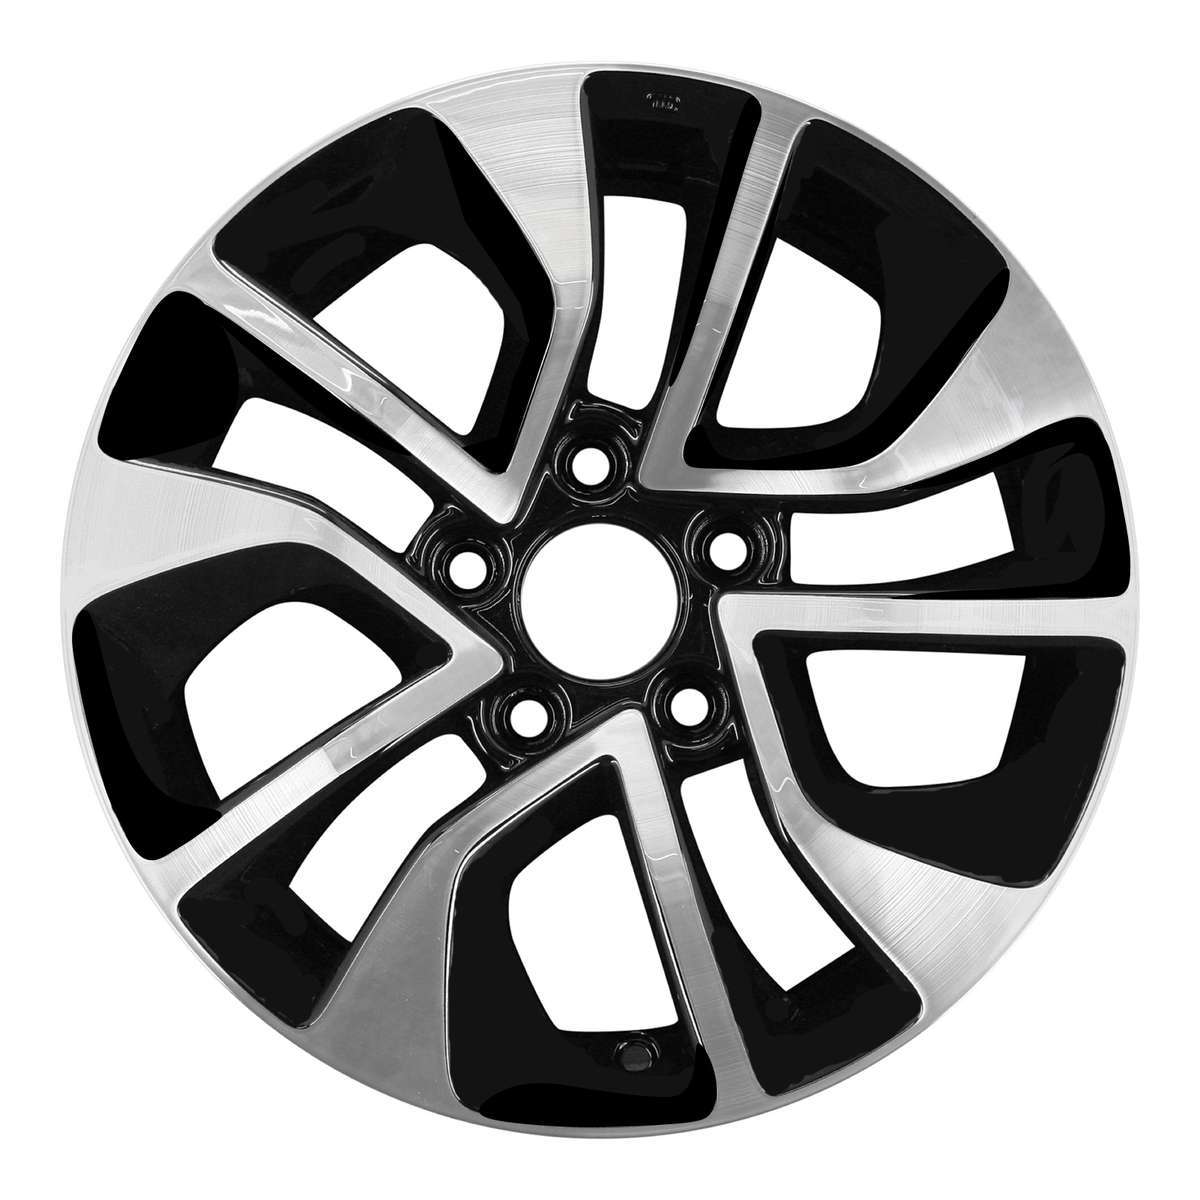 2013 Honda Civic New 16" Replacement Wheel Rim RW64054MB